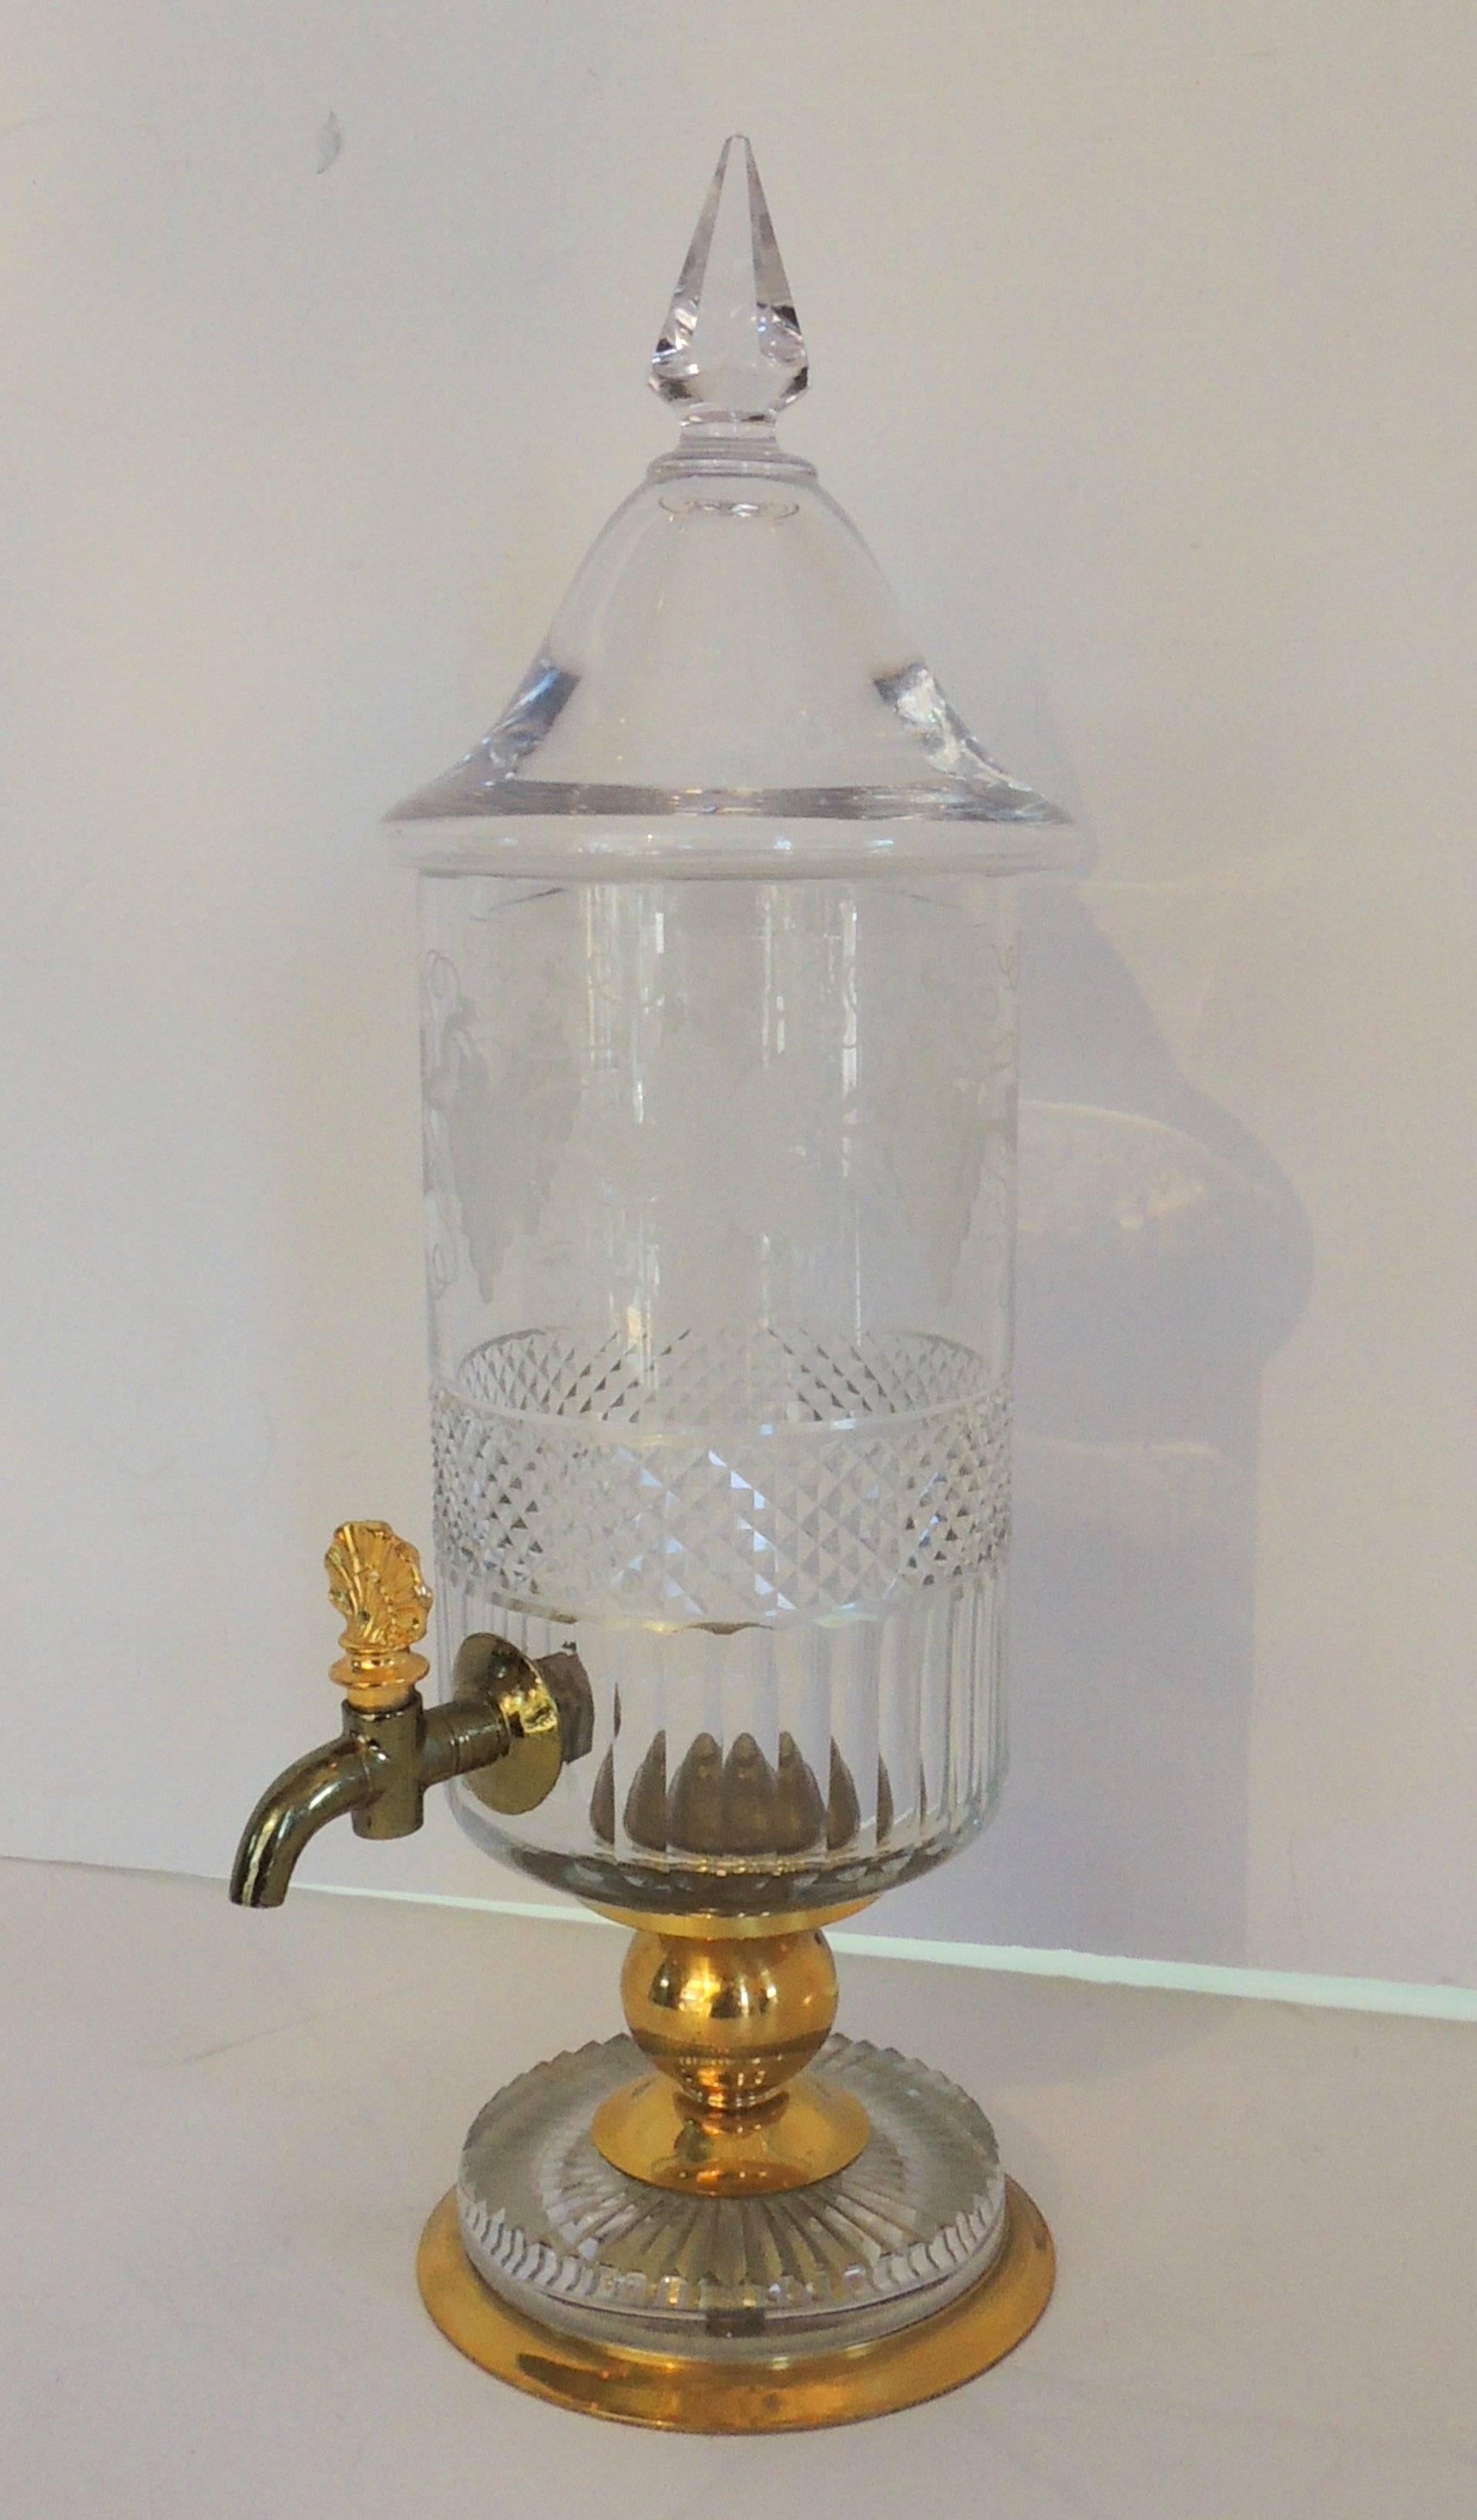 Wonderful French gilt etched glass crystal baccarat beverage bar ware server decanter and ormolu spigot
Measures: 15